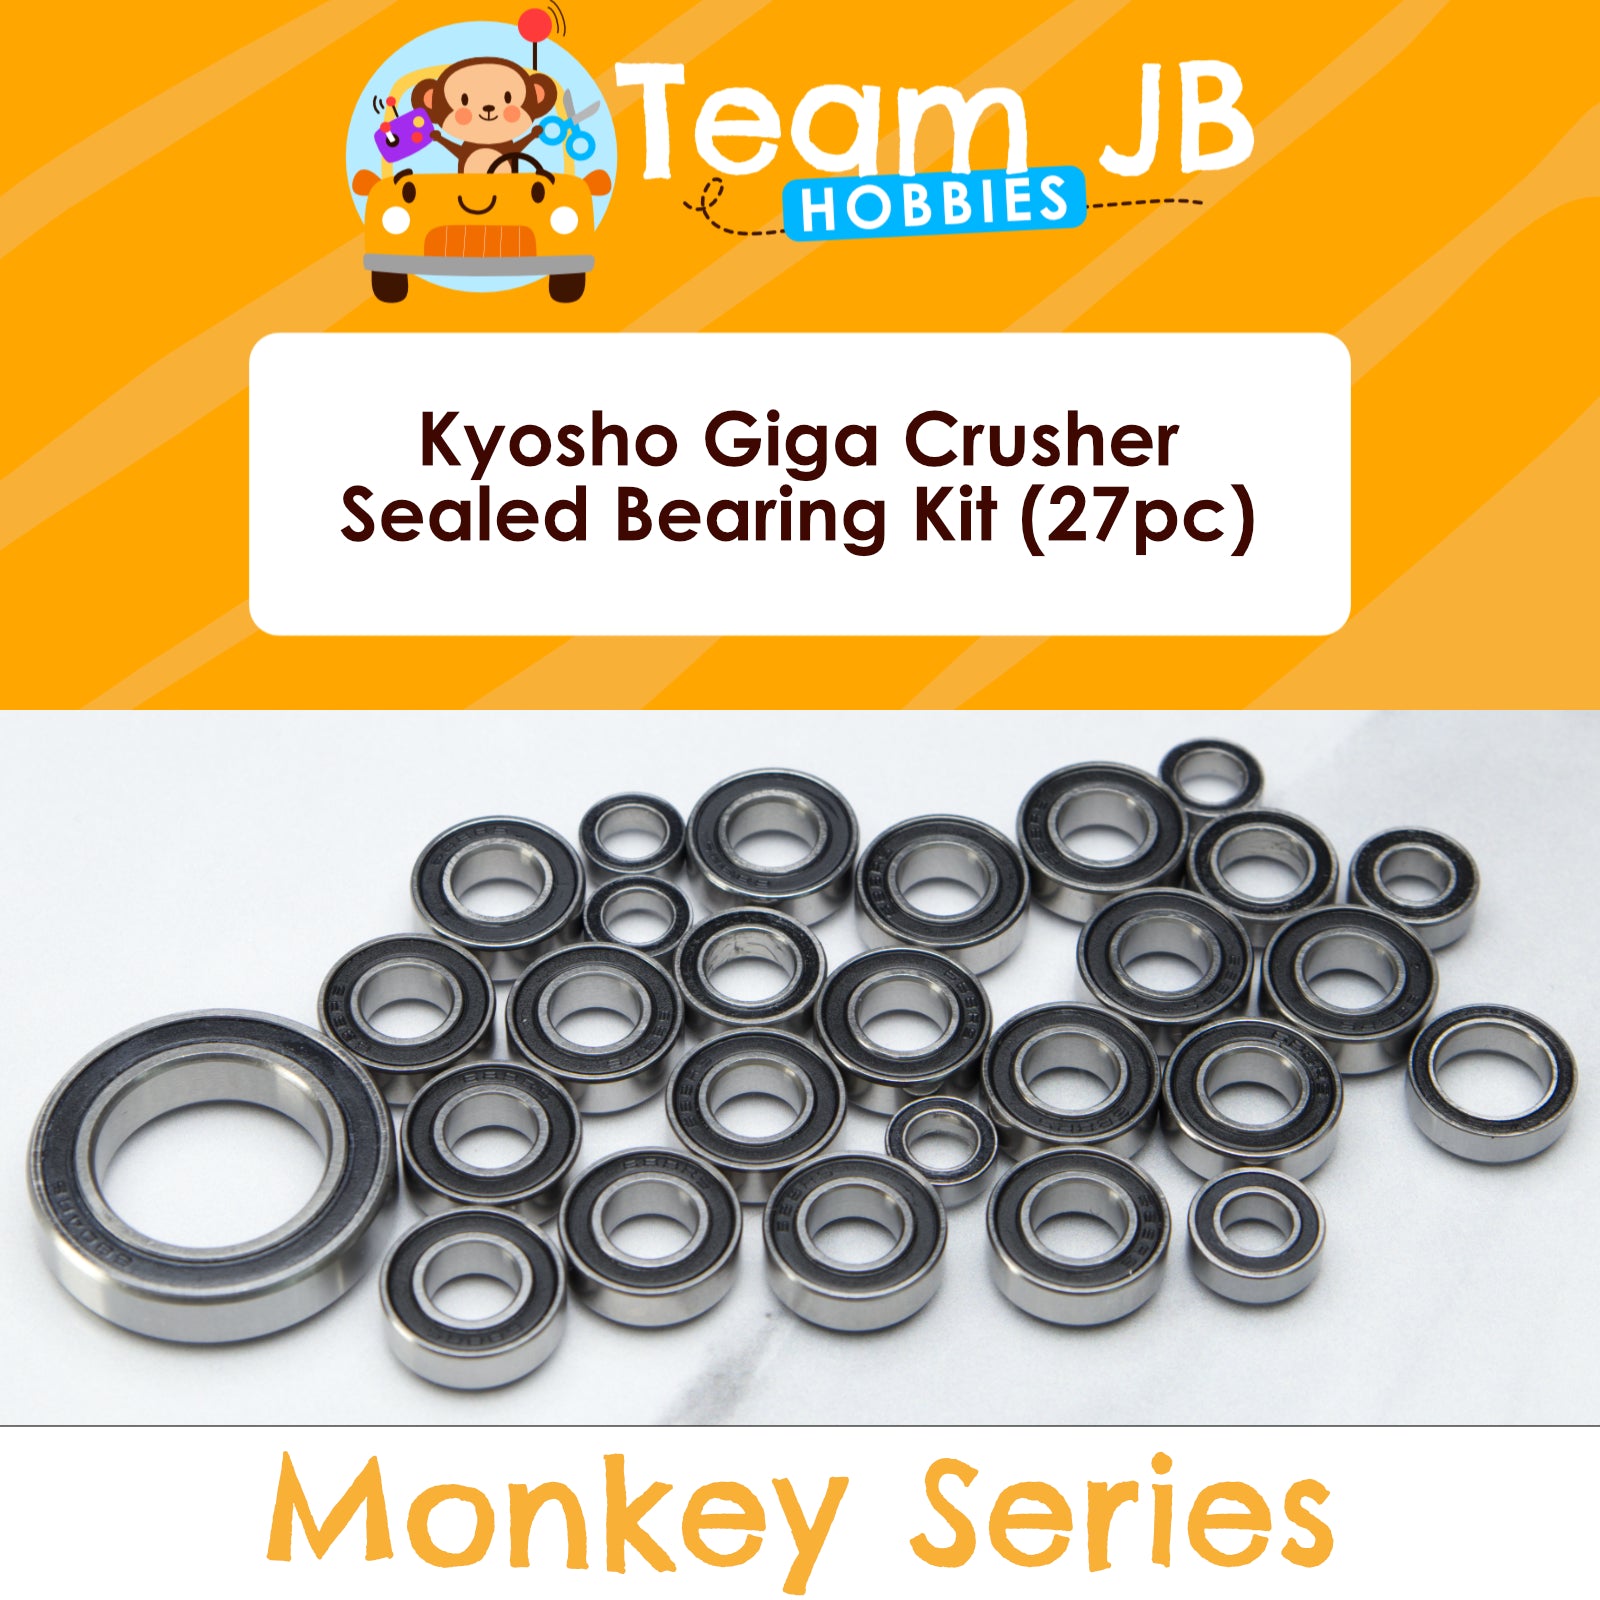 Kyosho Giga Crusher - Sealed Bearing Kit